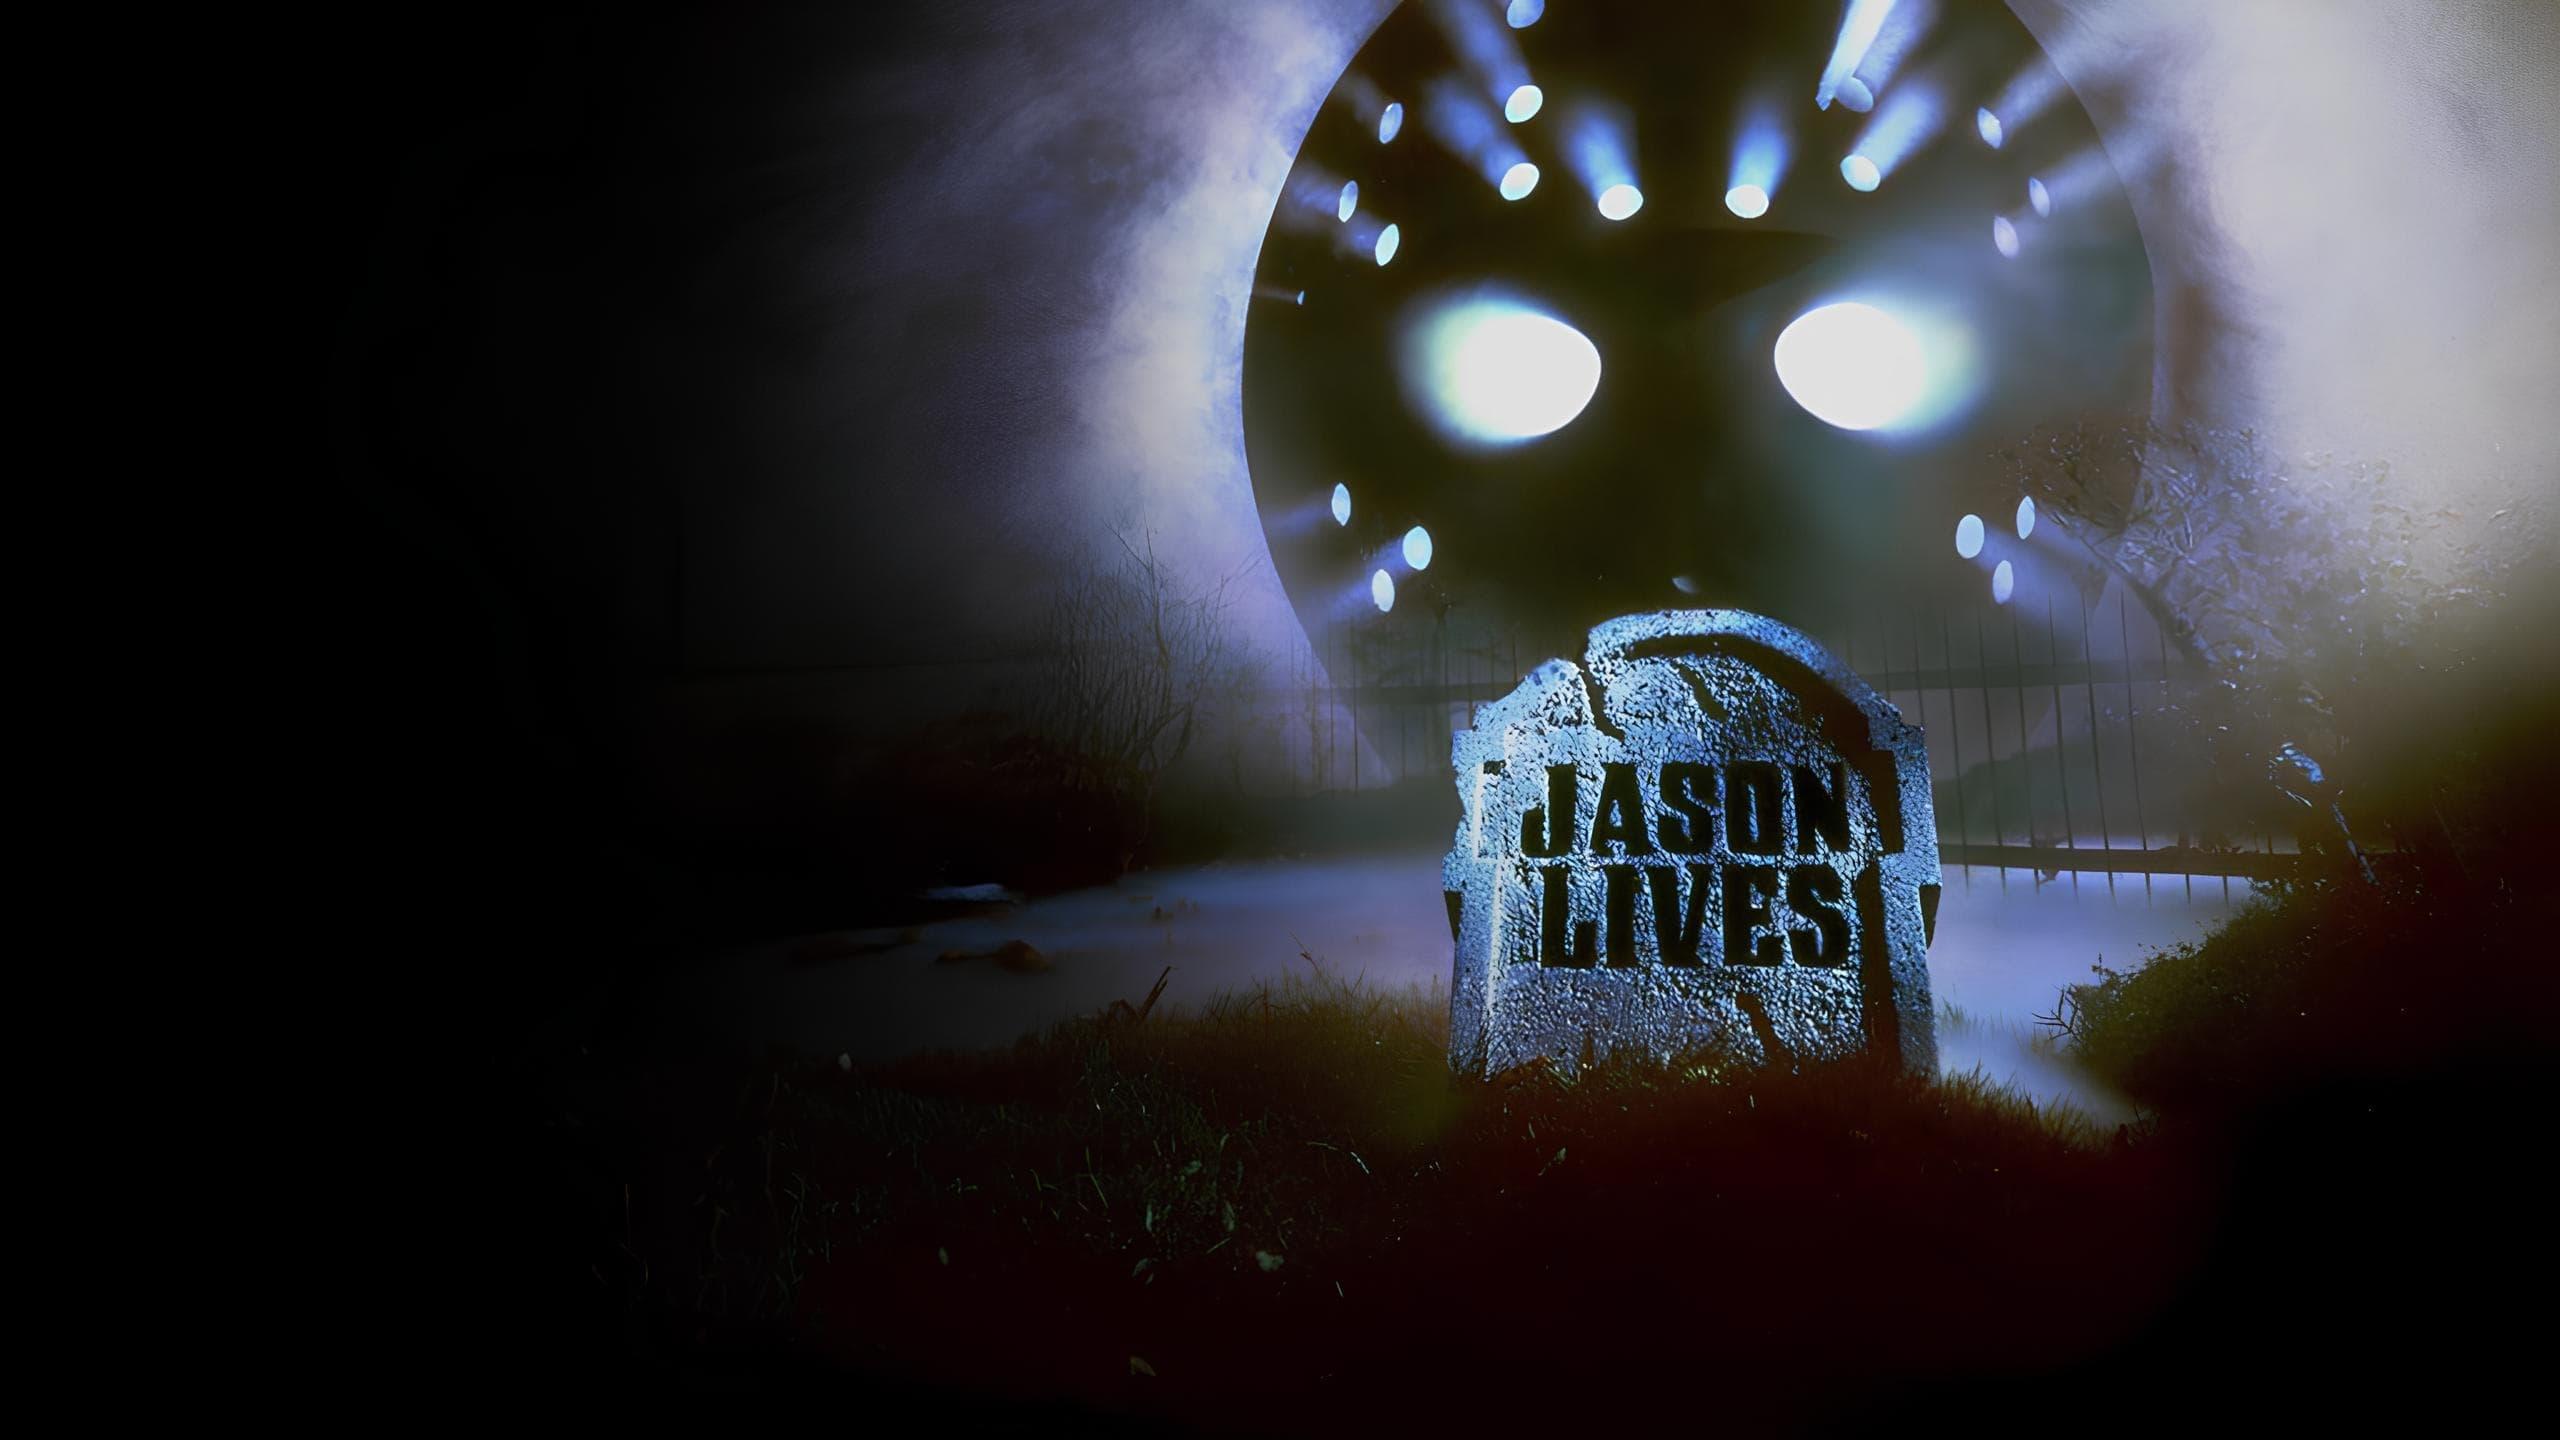 Friday the 13th Part VI: Jason Lives backdrop